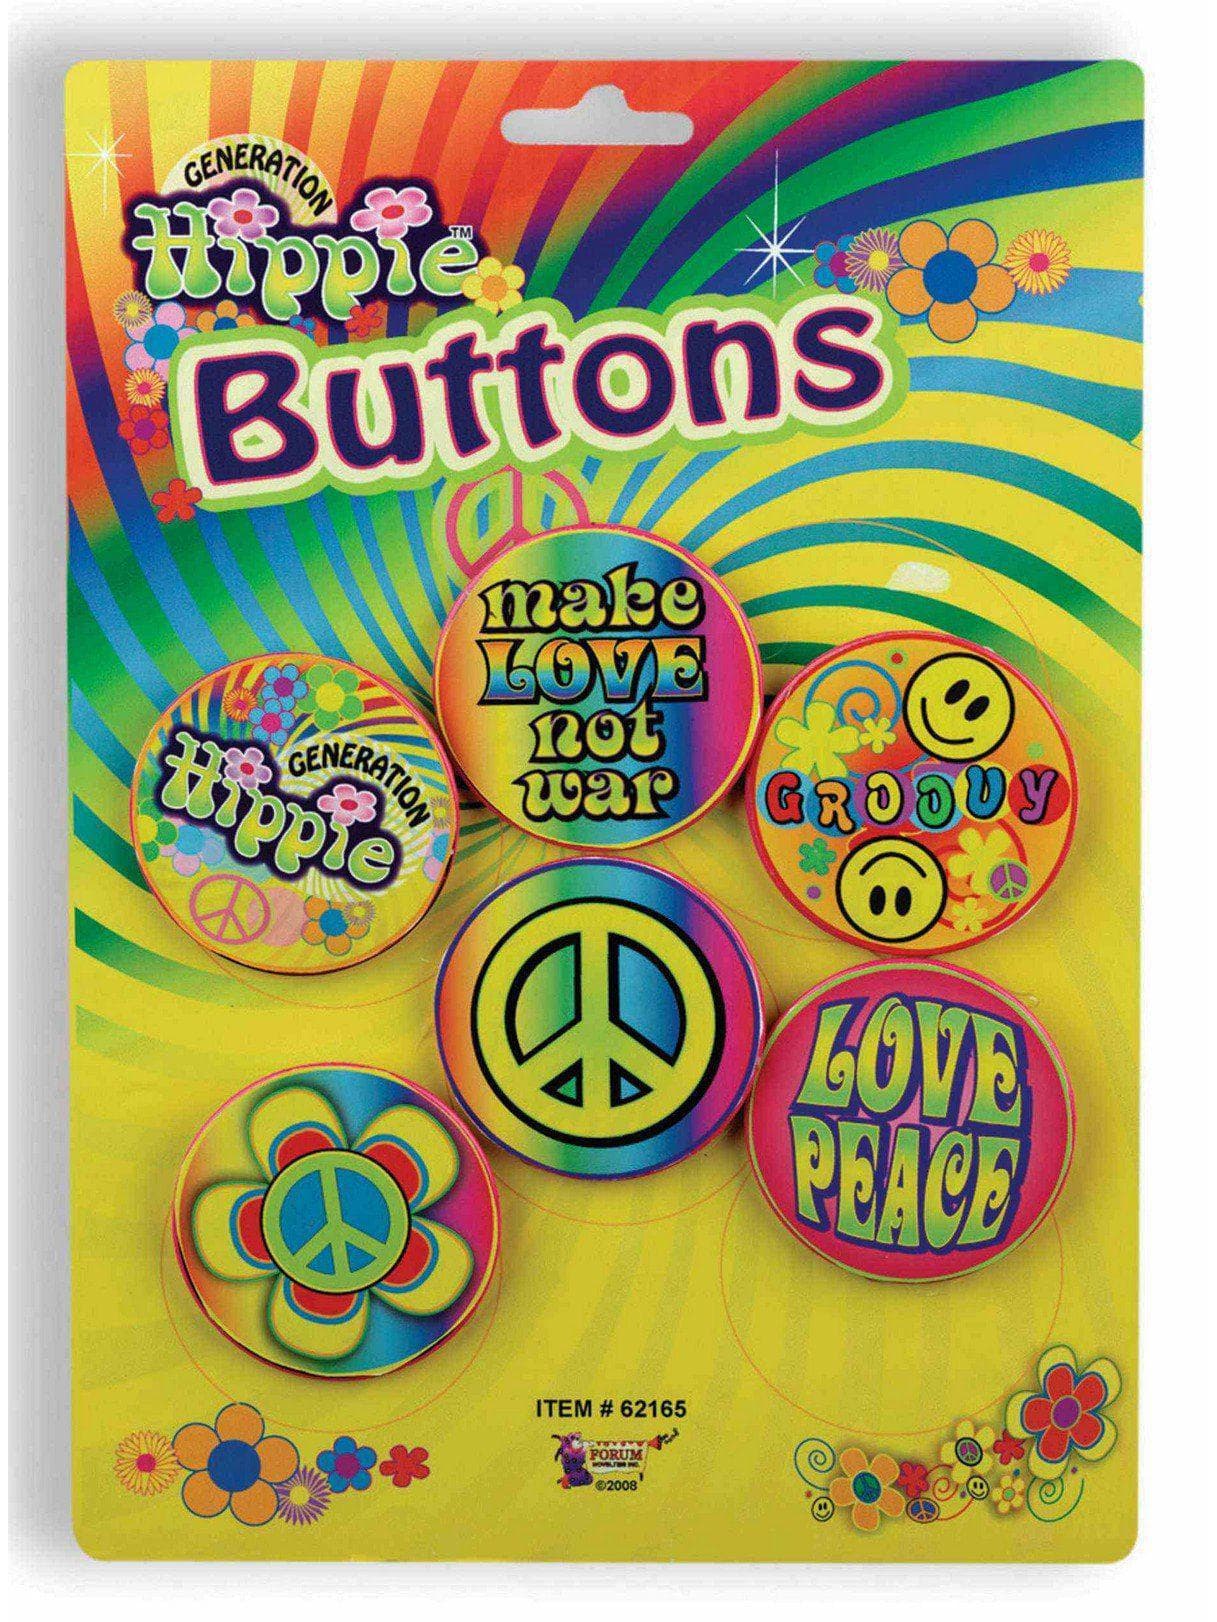 Hippie Buttons - costumes.com